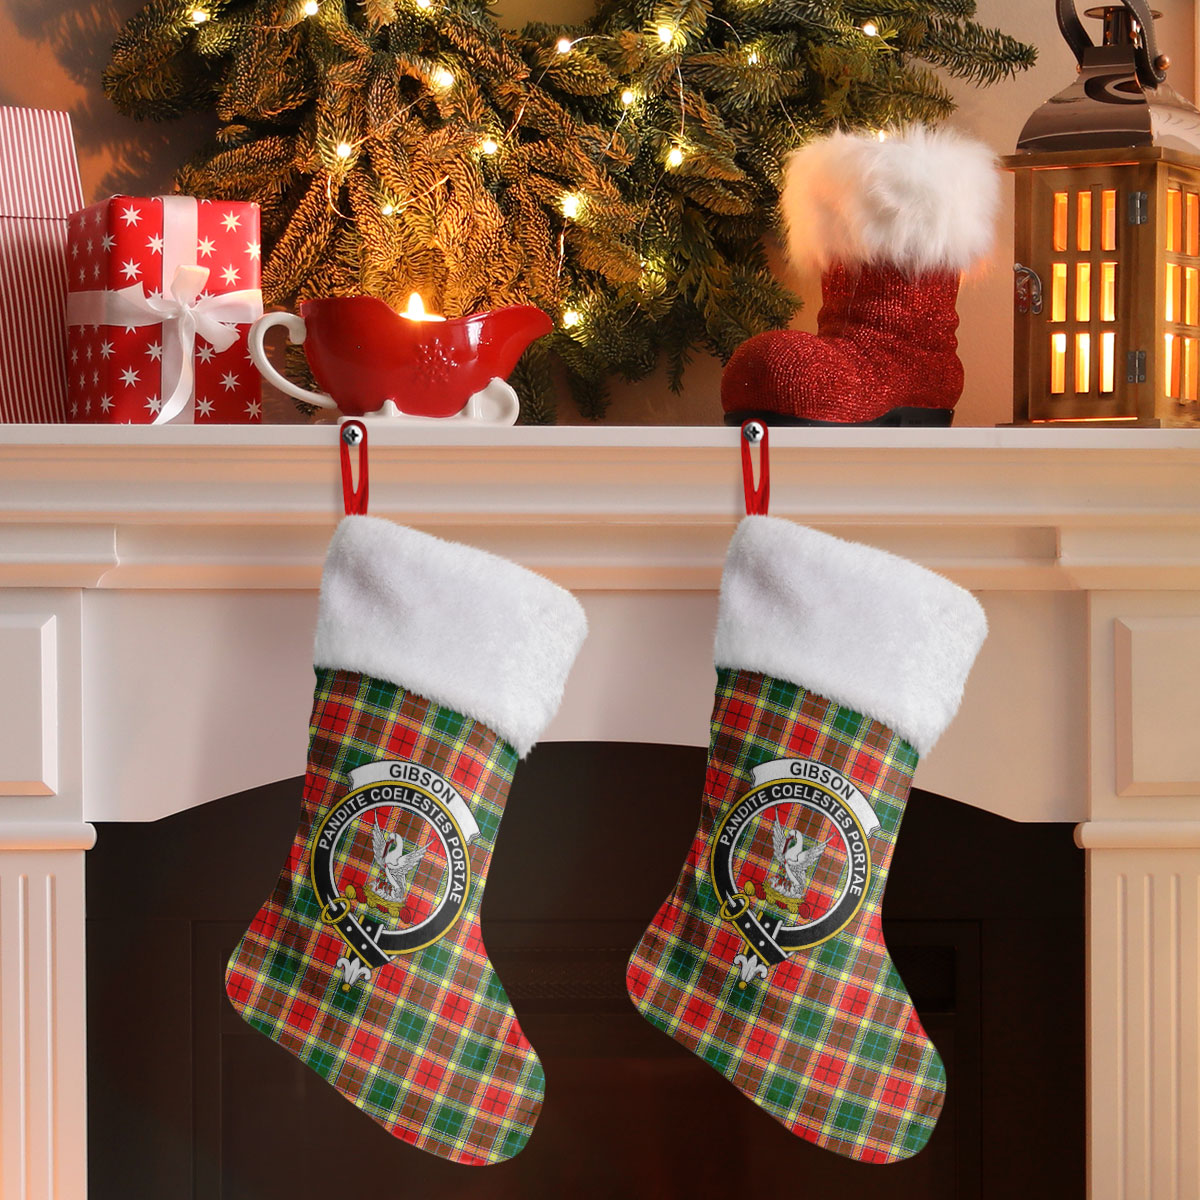 Gibson Tartan Crest Christmas Stocking